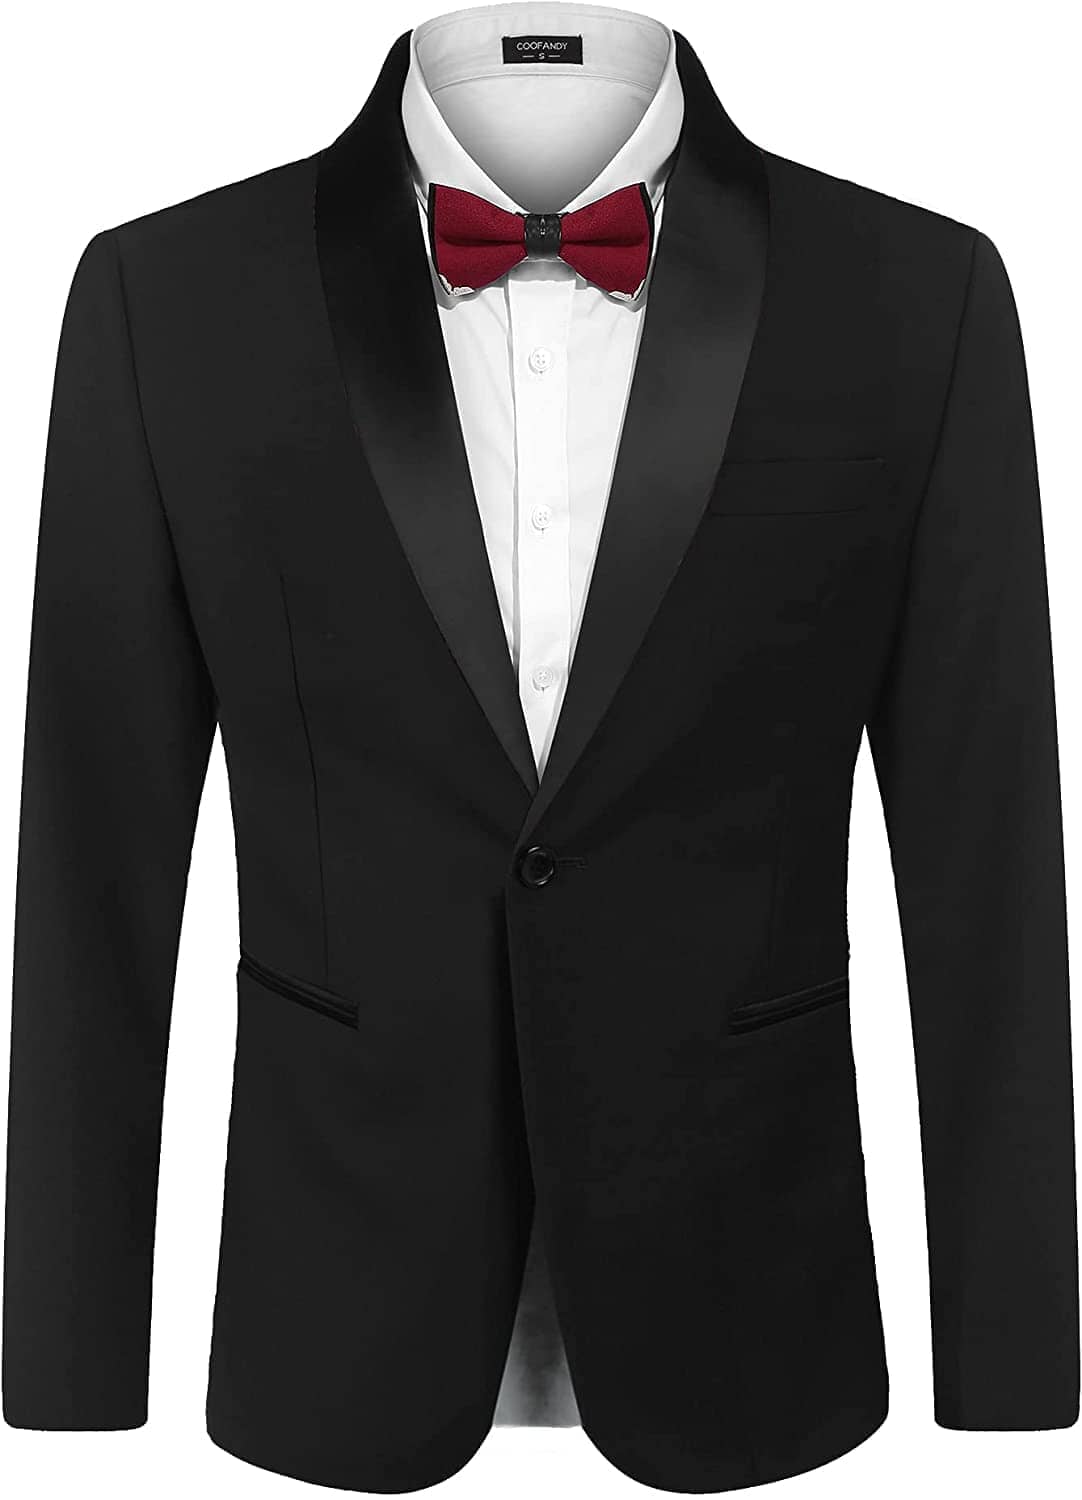 Coofandy Slim Fit Wedding Blazer (US Only) Blazer coofandy Black S 